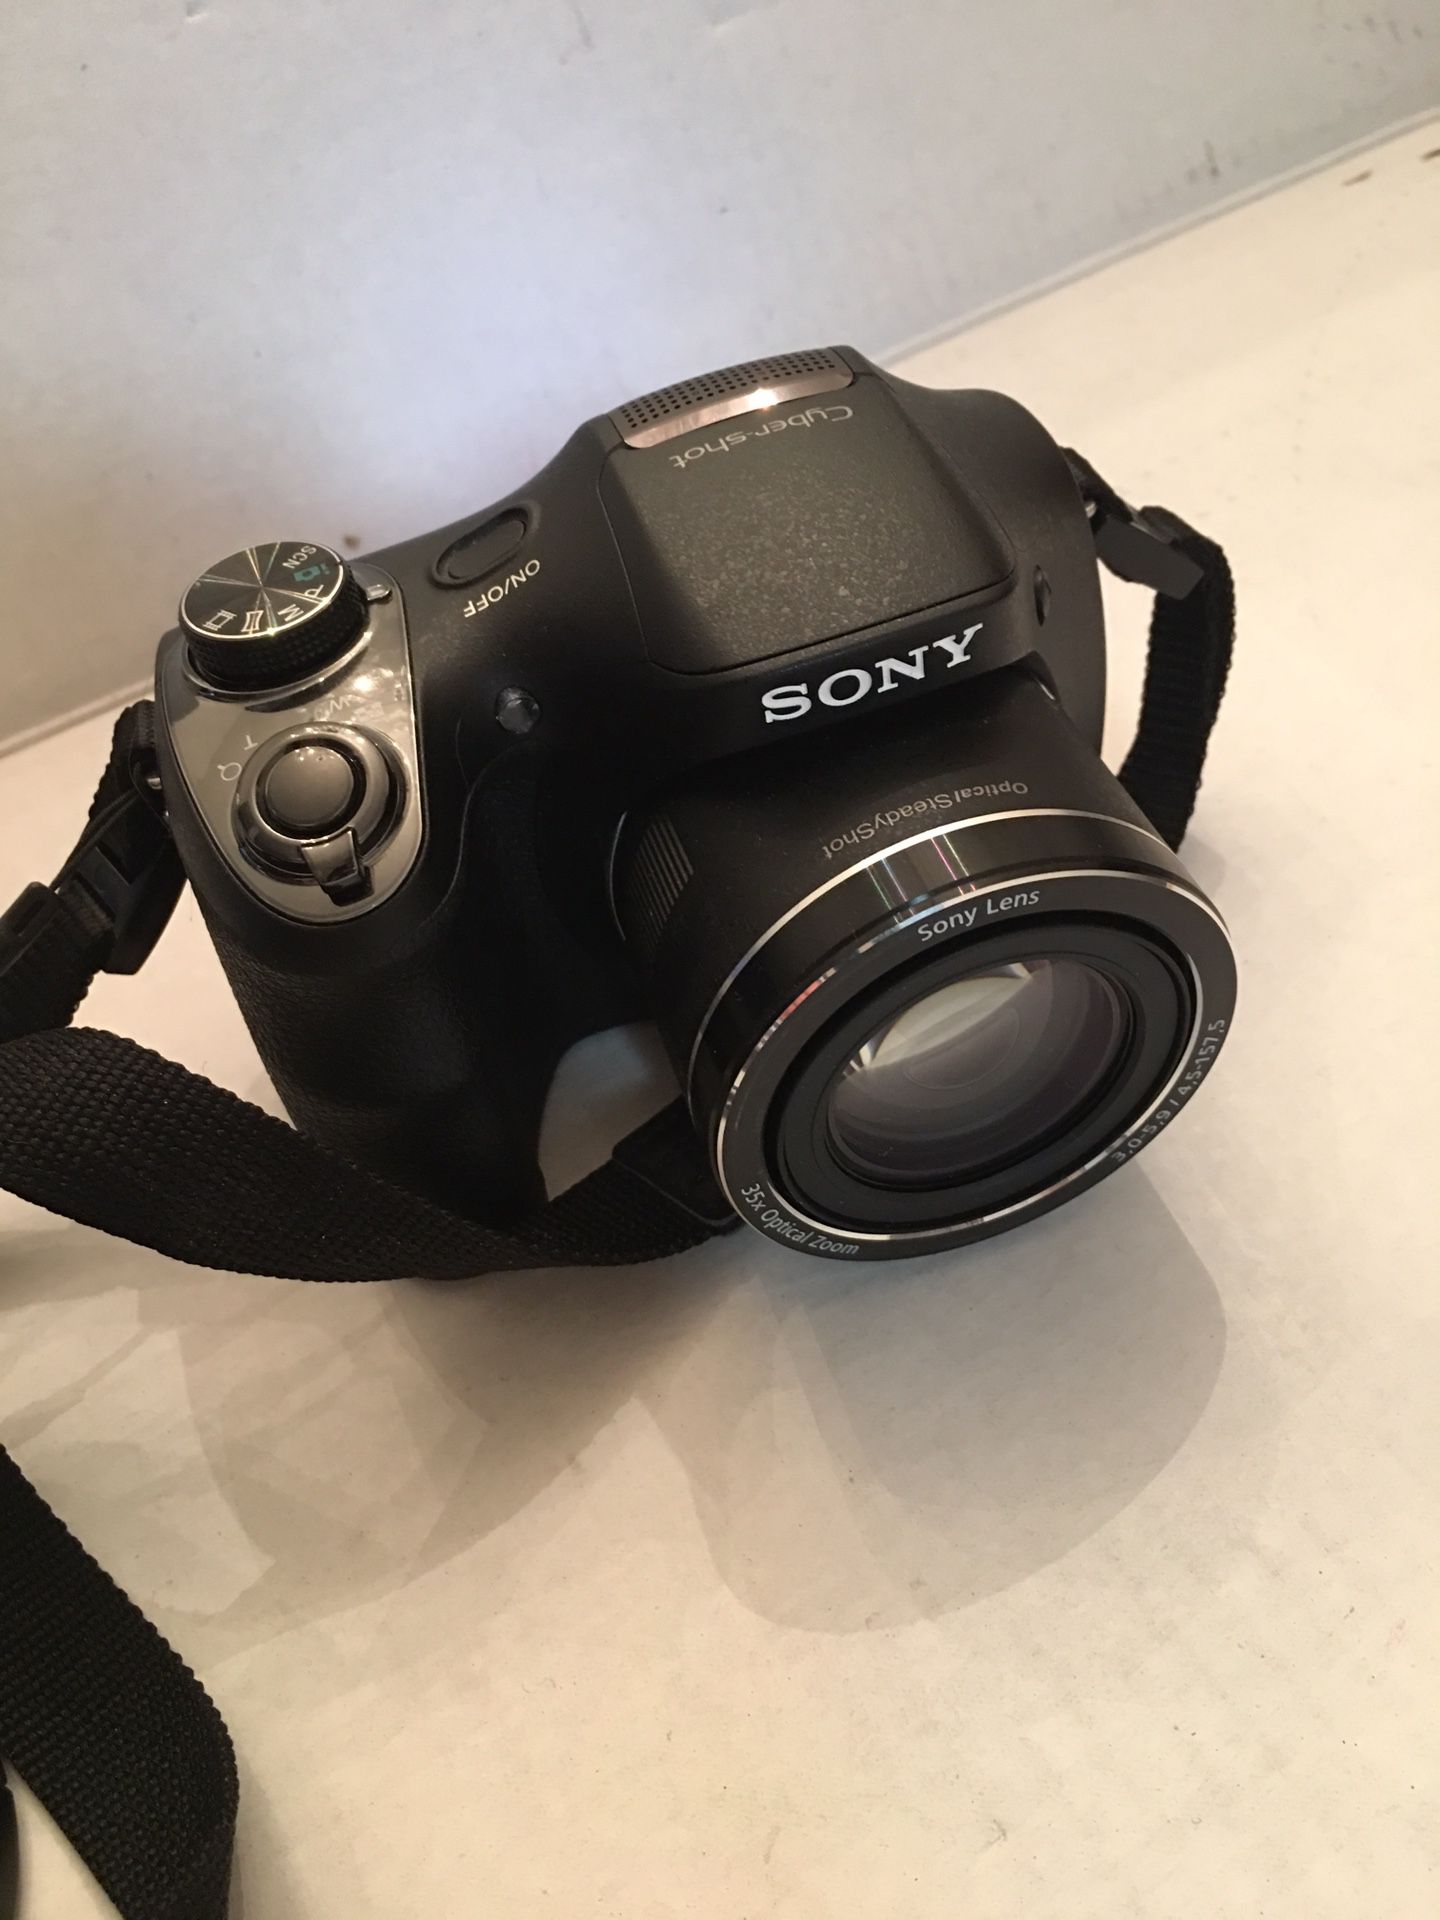 Sony 20.1 Megapixel Digital Camera j-H300, Strap, bag/case & Card, 4 AA Battery Included”Like New”. $220 OBO.